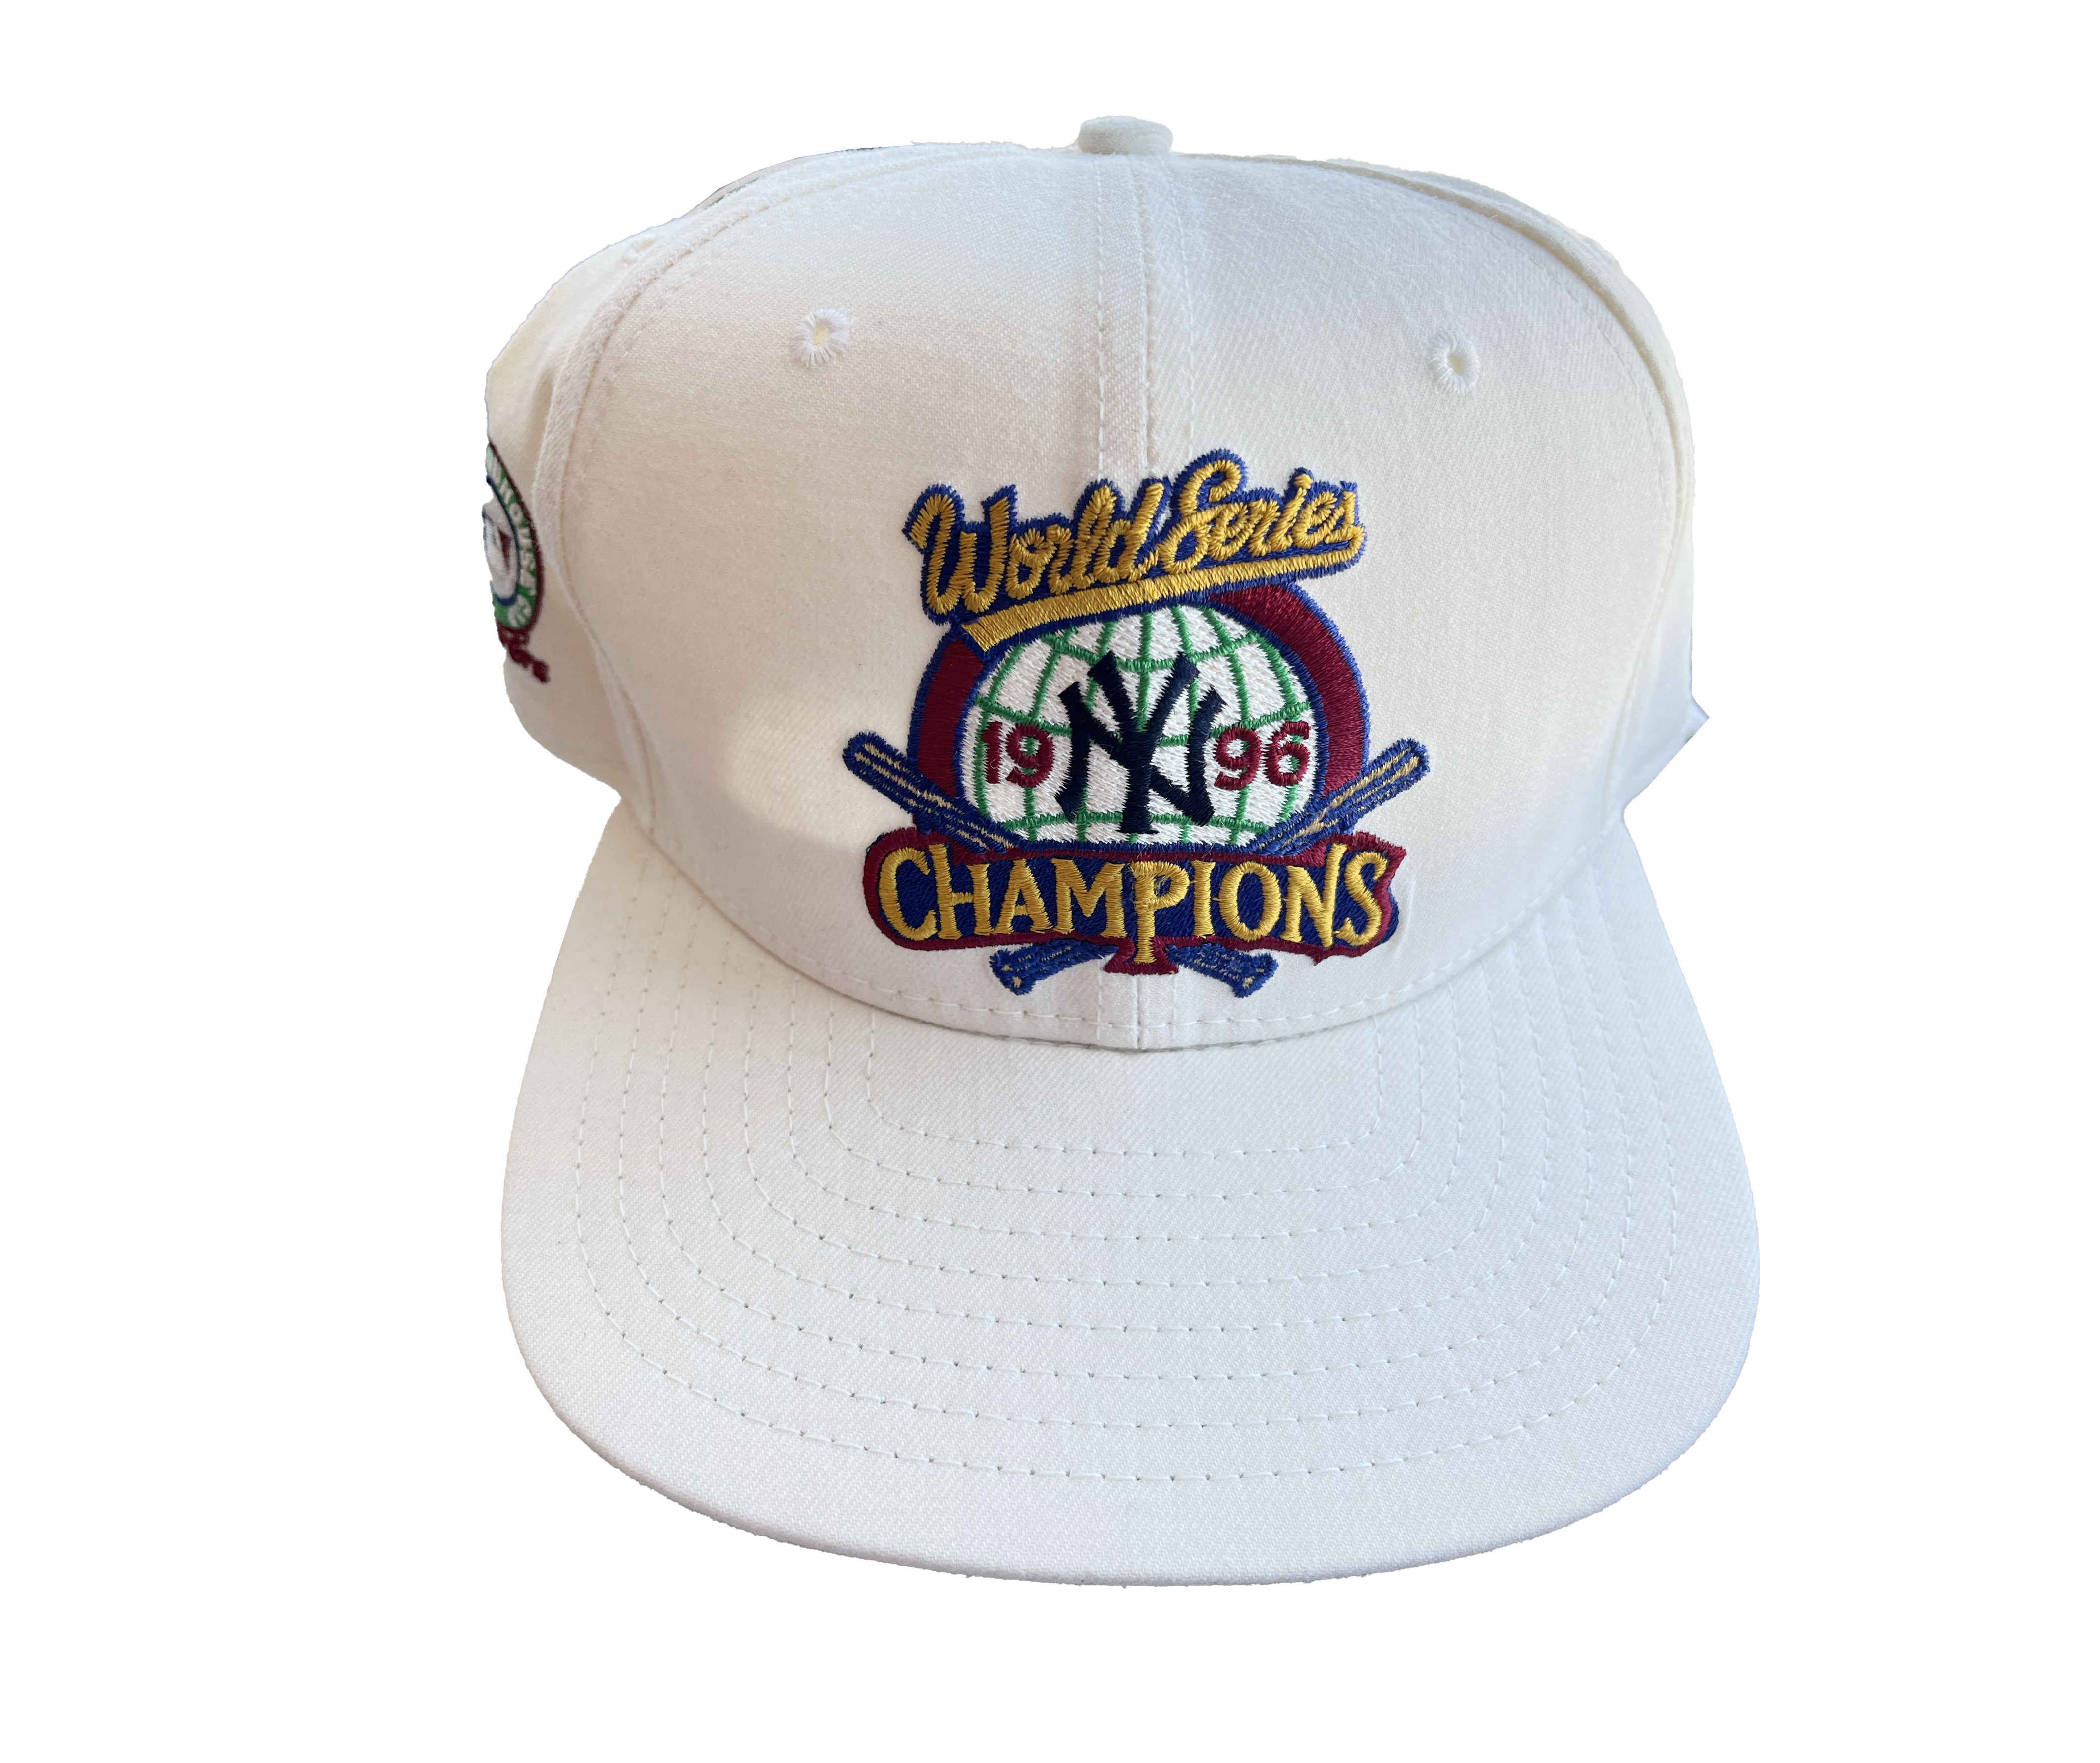 96 Vintage Yankees Championship snapback – No Company .inc